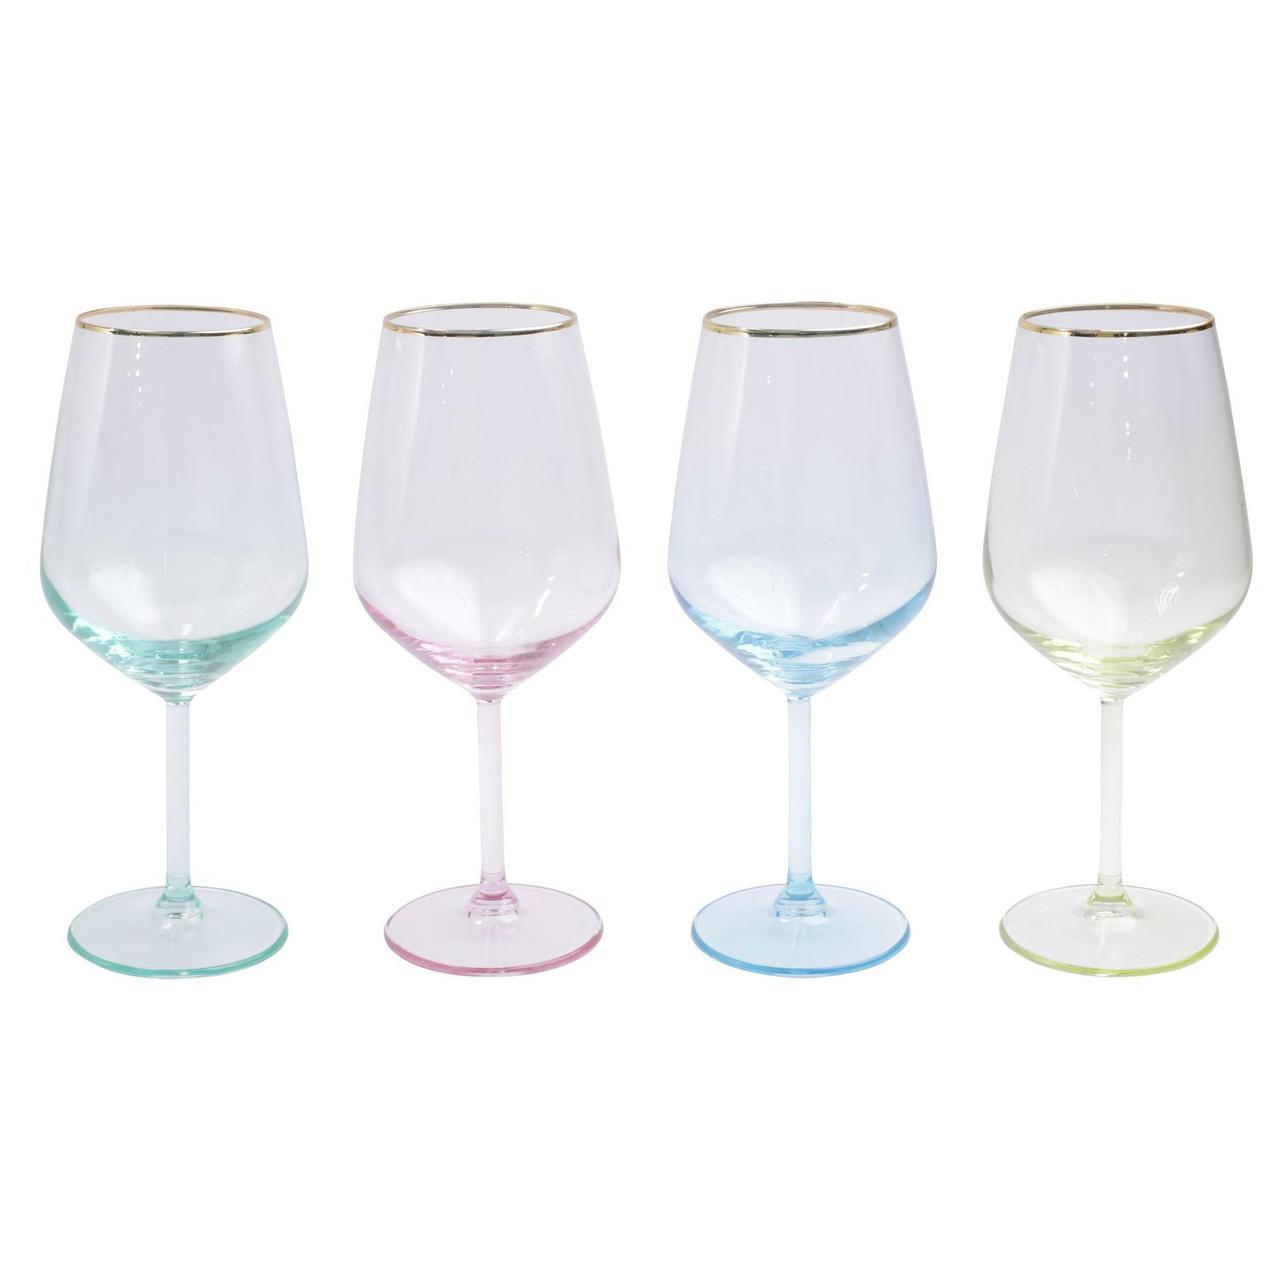 https://cdn11.bigcommerce.com/s-fi9cif0ic4/images/stencil/1280x1280/products/4180/64213/vietri-rainbow-assorted-wine-glasses-set-of-4__88911.1694704228.jpg?c=1